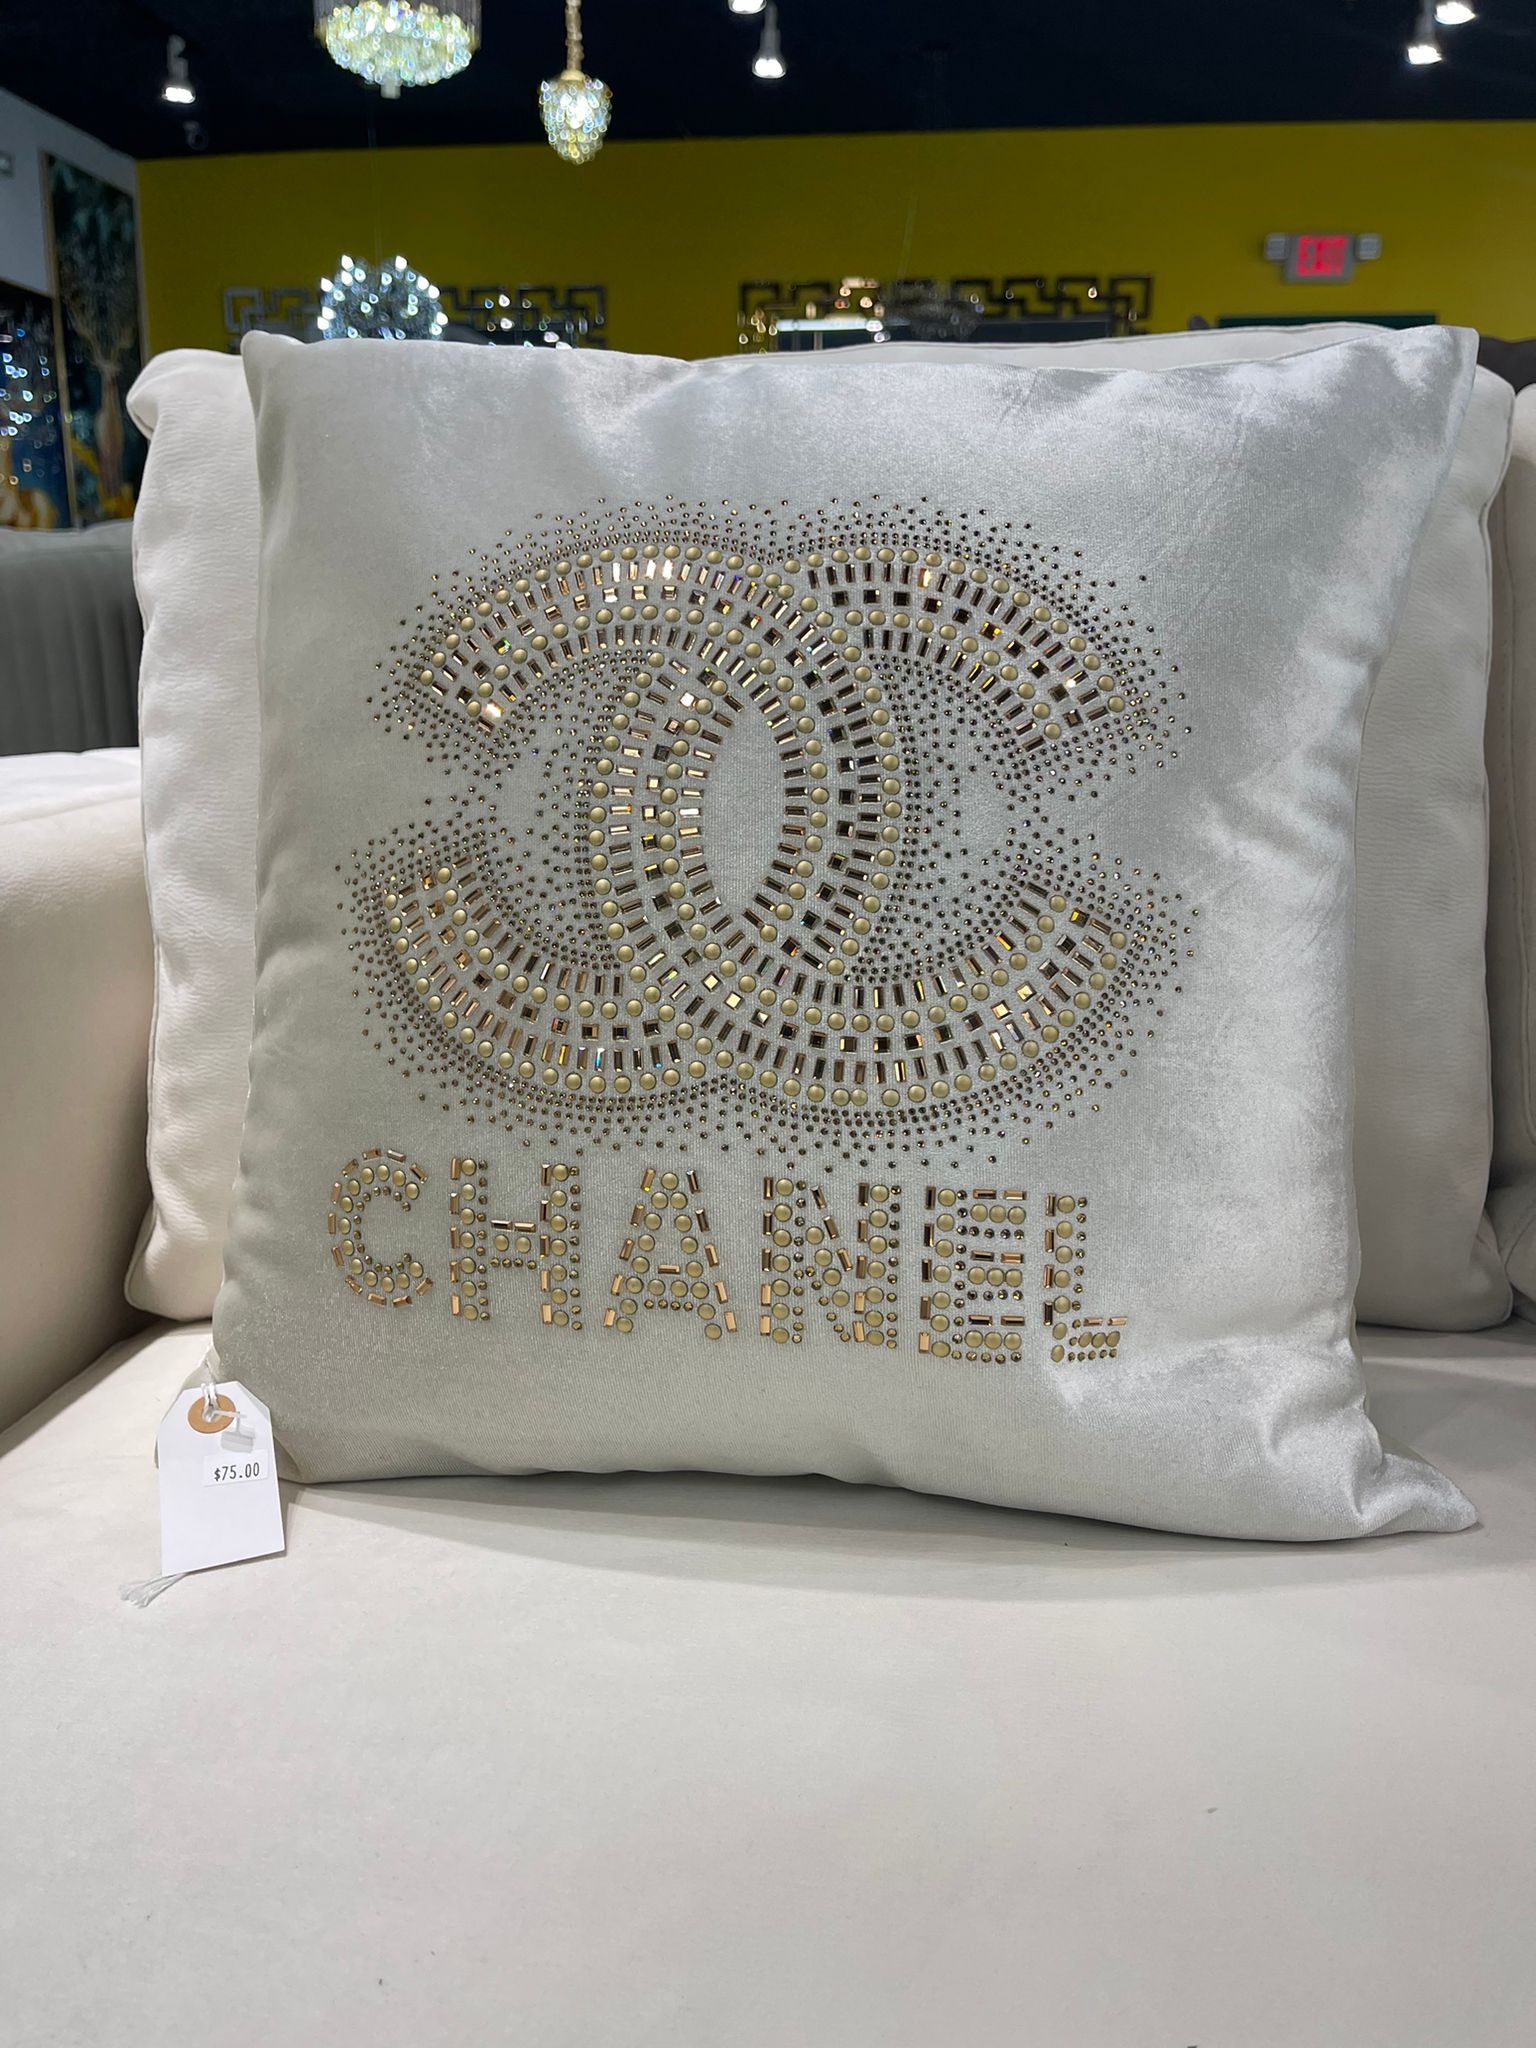 bling chanel pillows